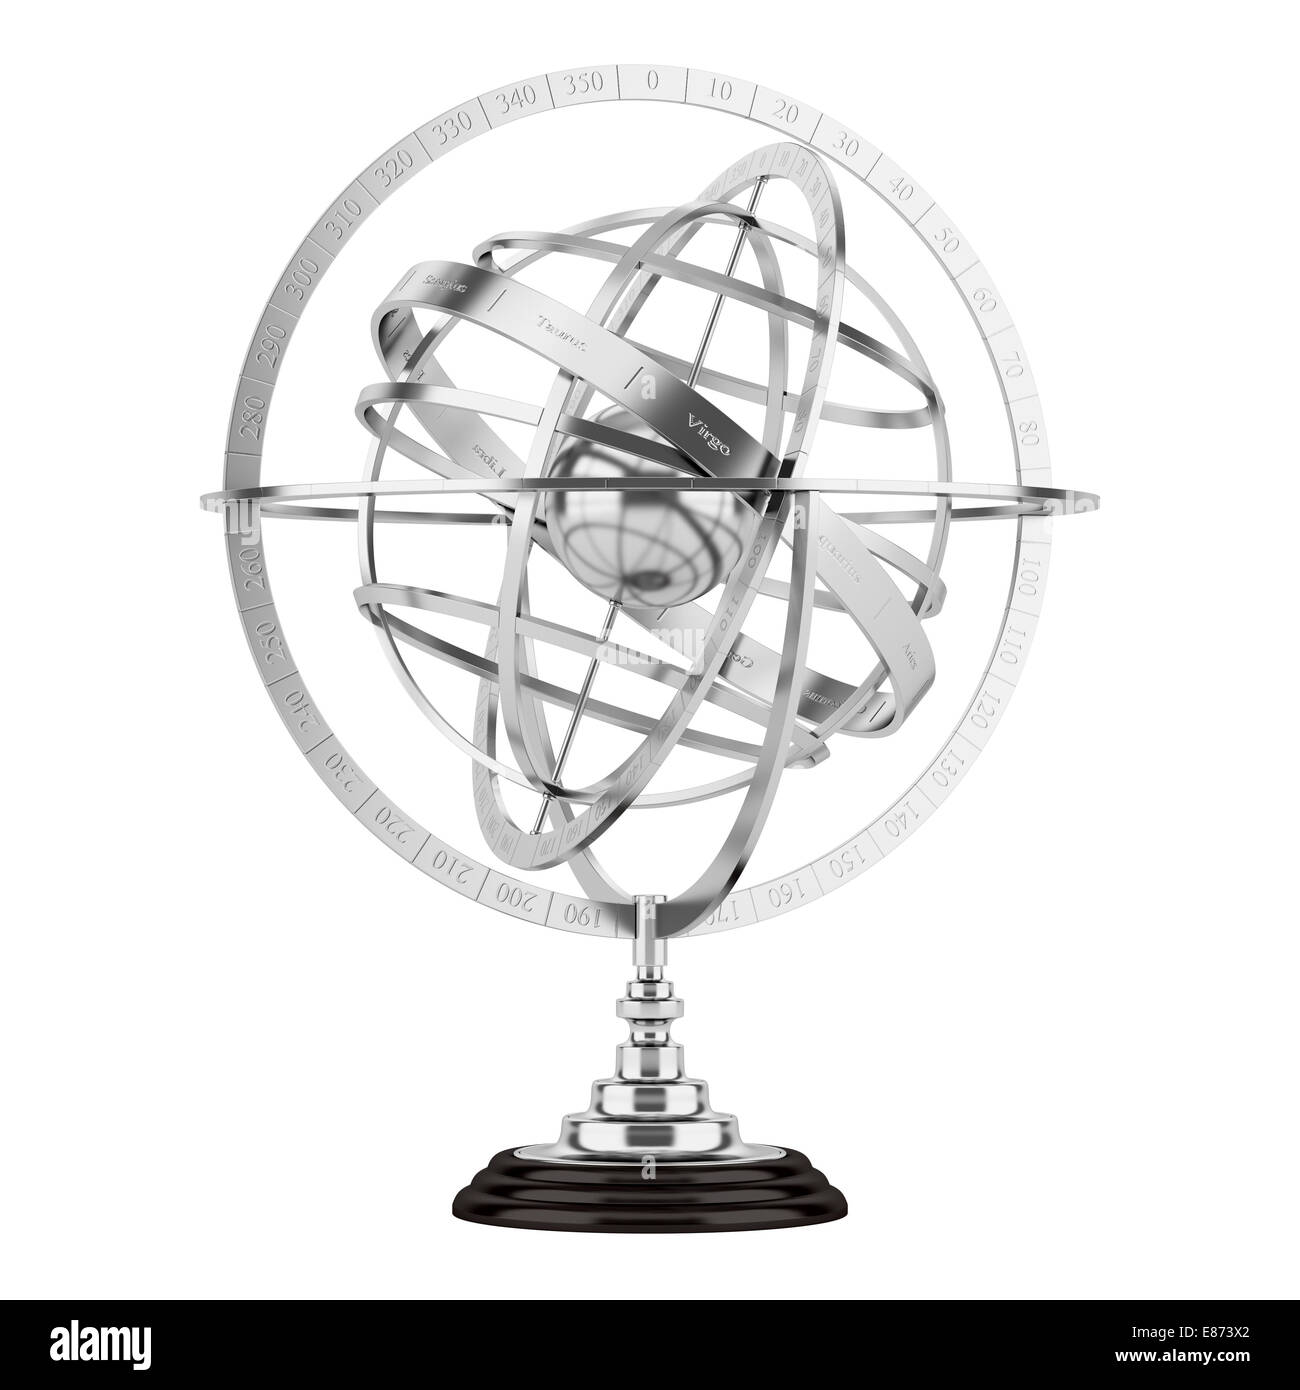 spherical astrolabe isolated on white background Stock Photo